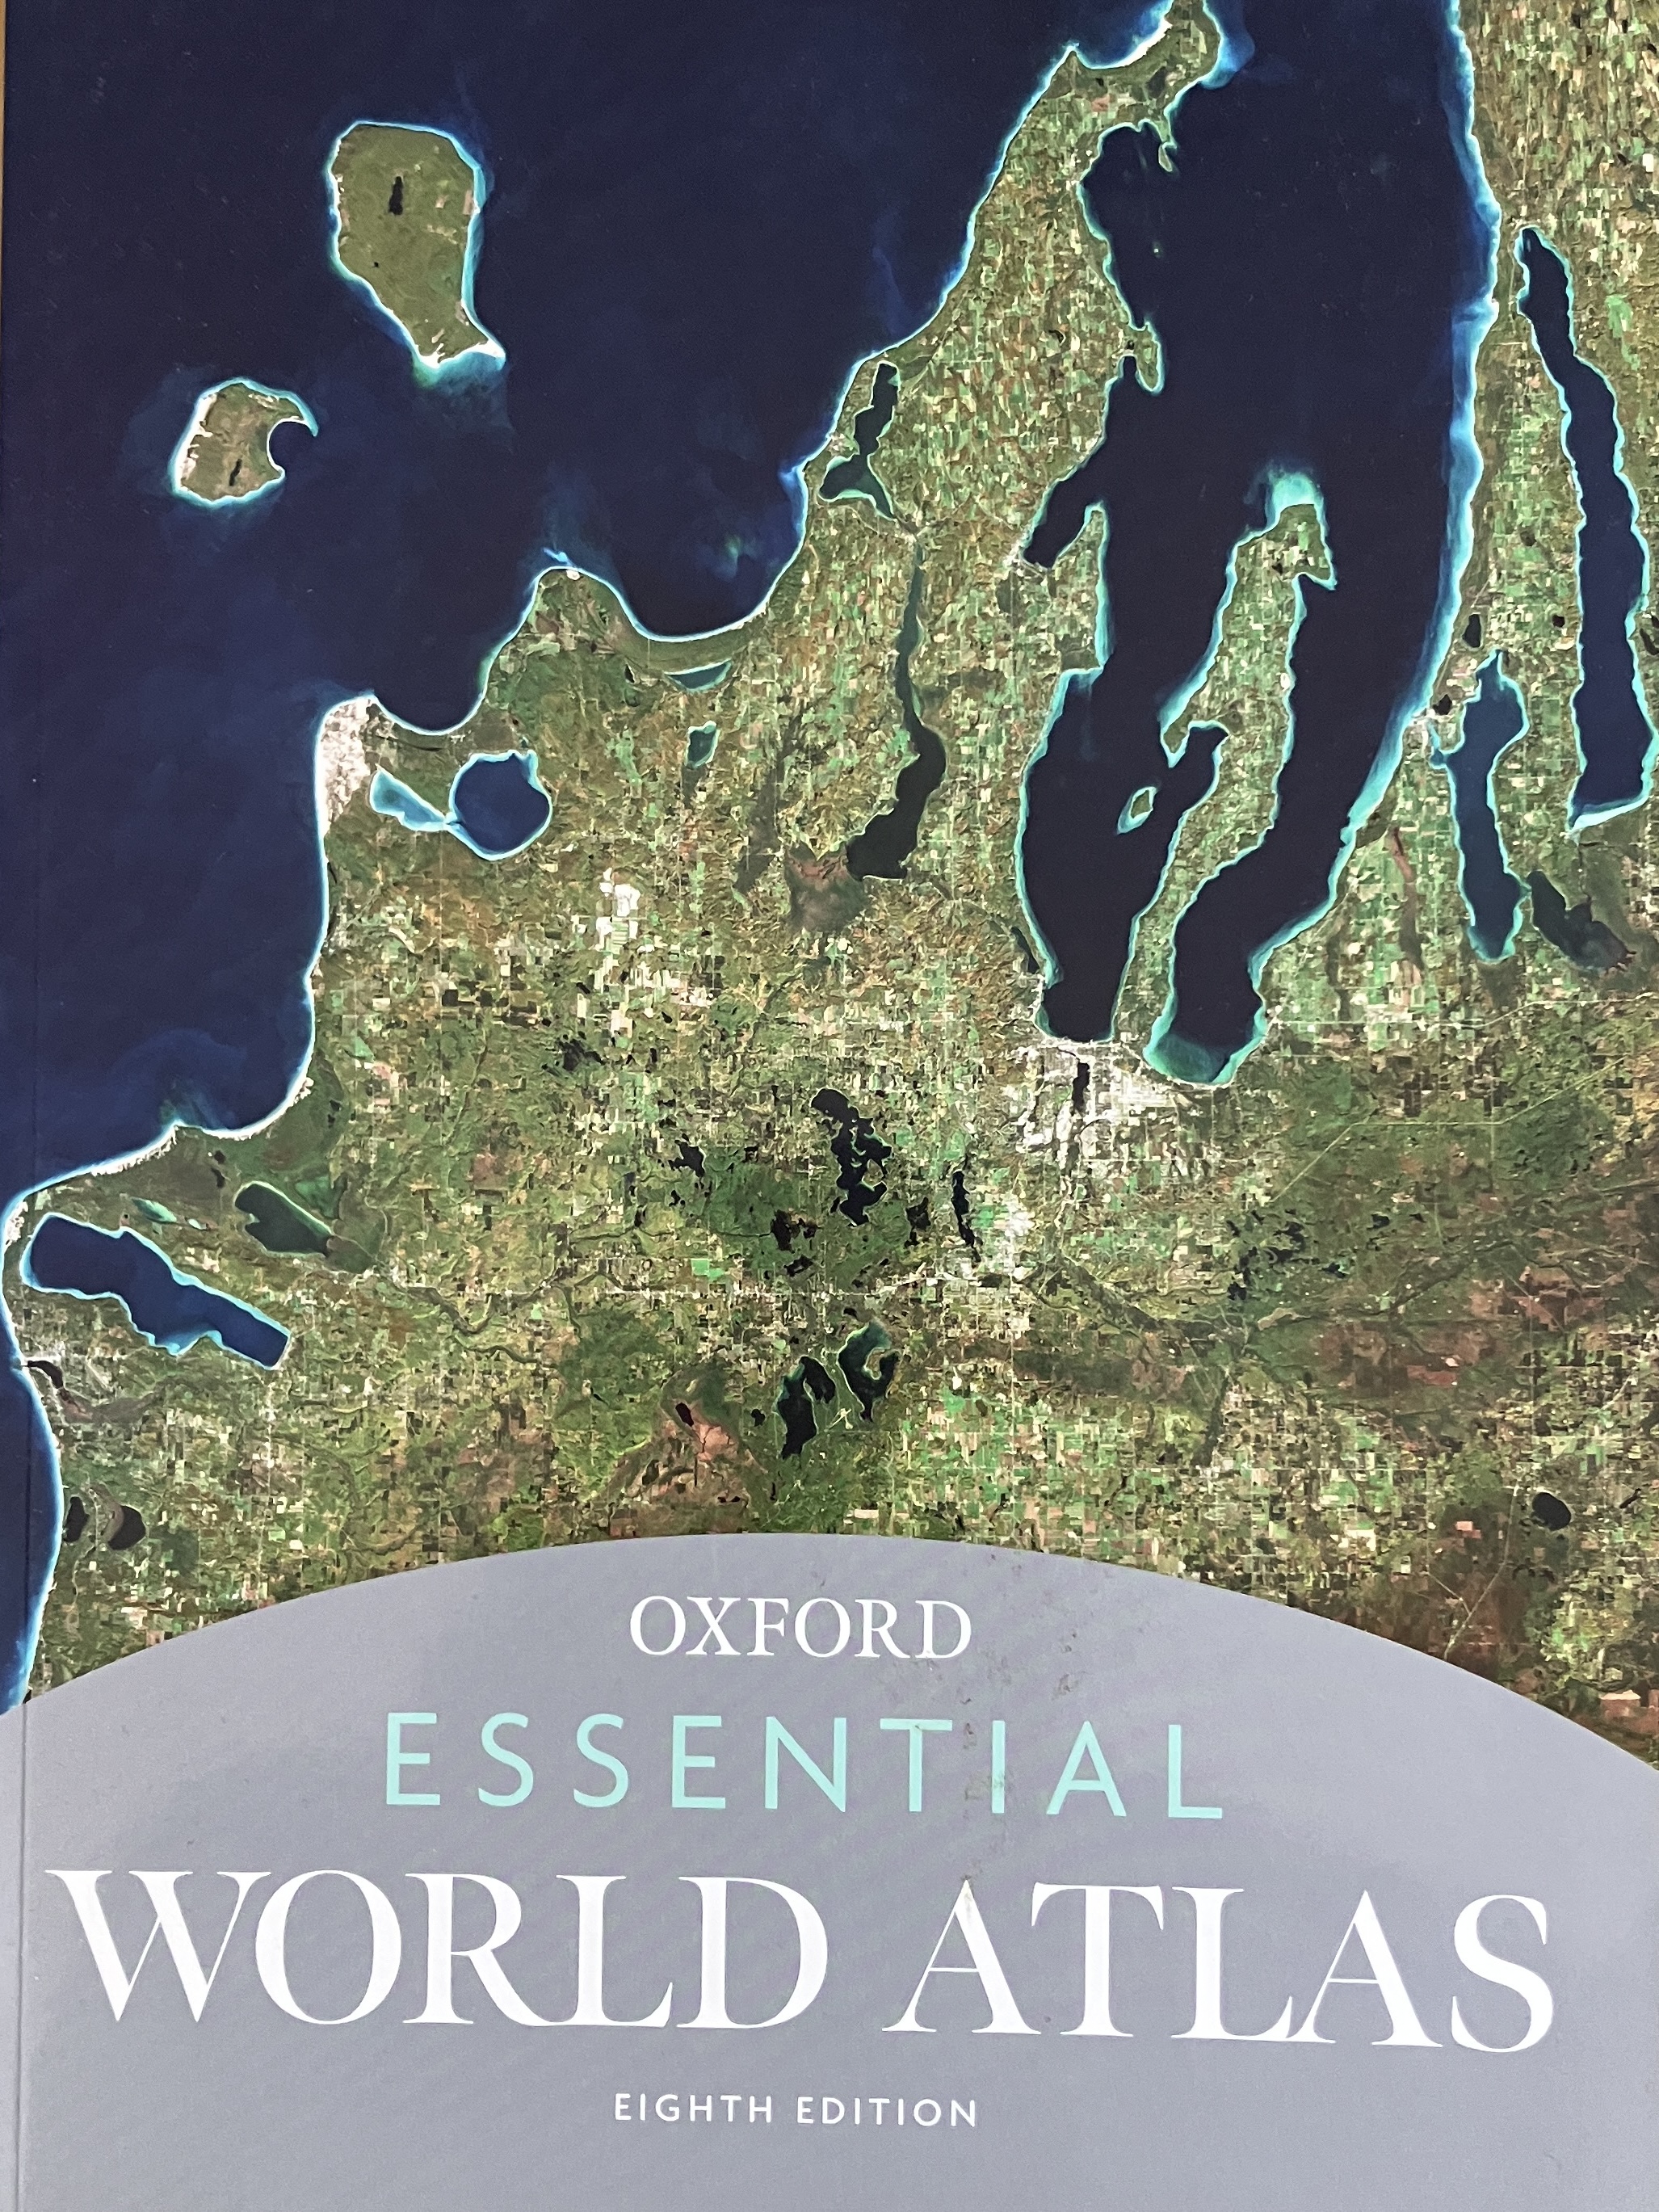 Oxford Essential World Atlas Eighth Edition Cover Design: Brady Mcnamara Cover Image: Leelanau Peninsula, Michigan. U.S. @ European Space Agency